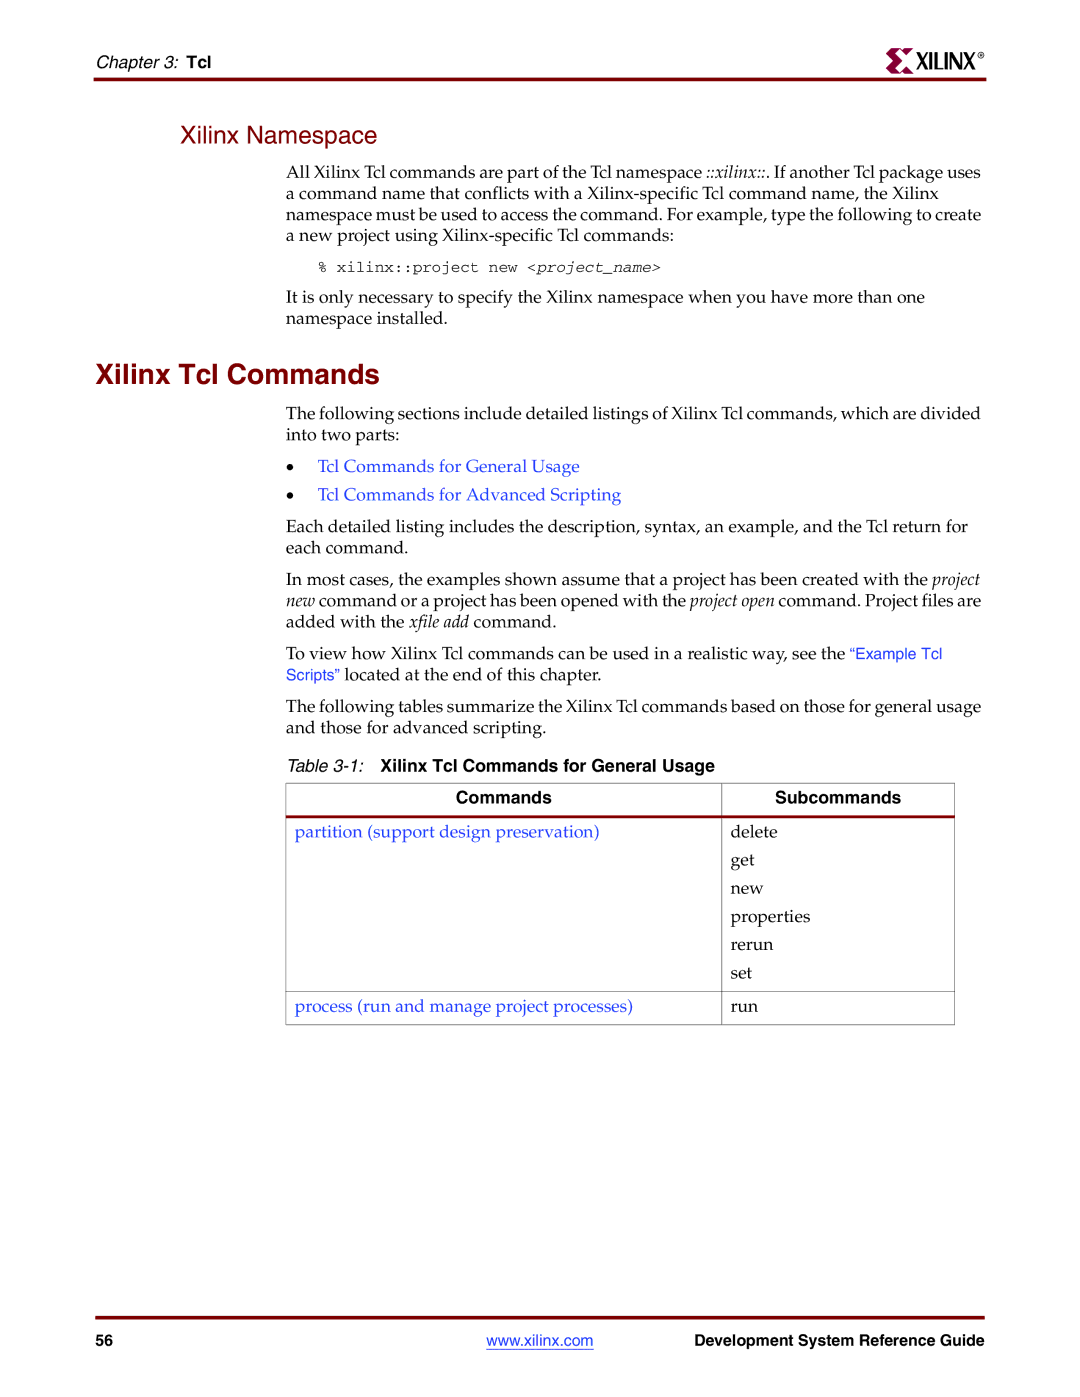 Xilinx 8.2i manual Xilinx Namespace, 1Xilinx Tcl Commands for General Usage Subcommands 